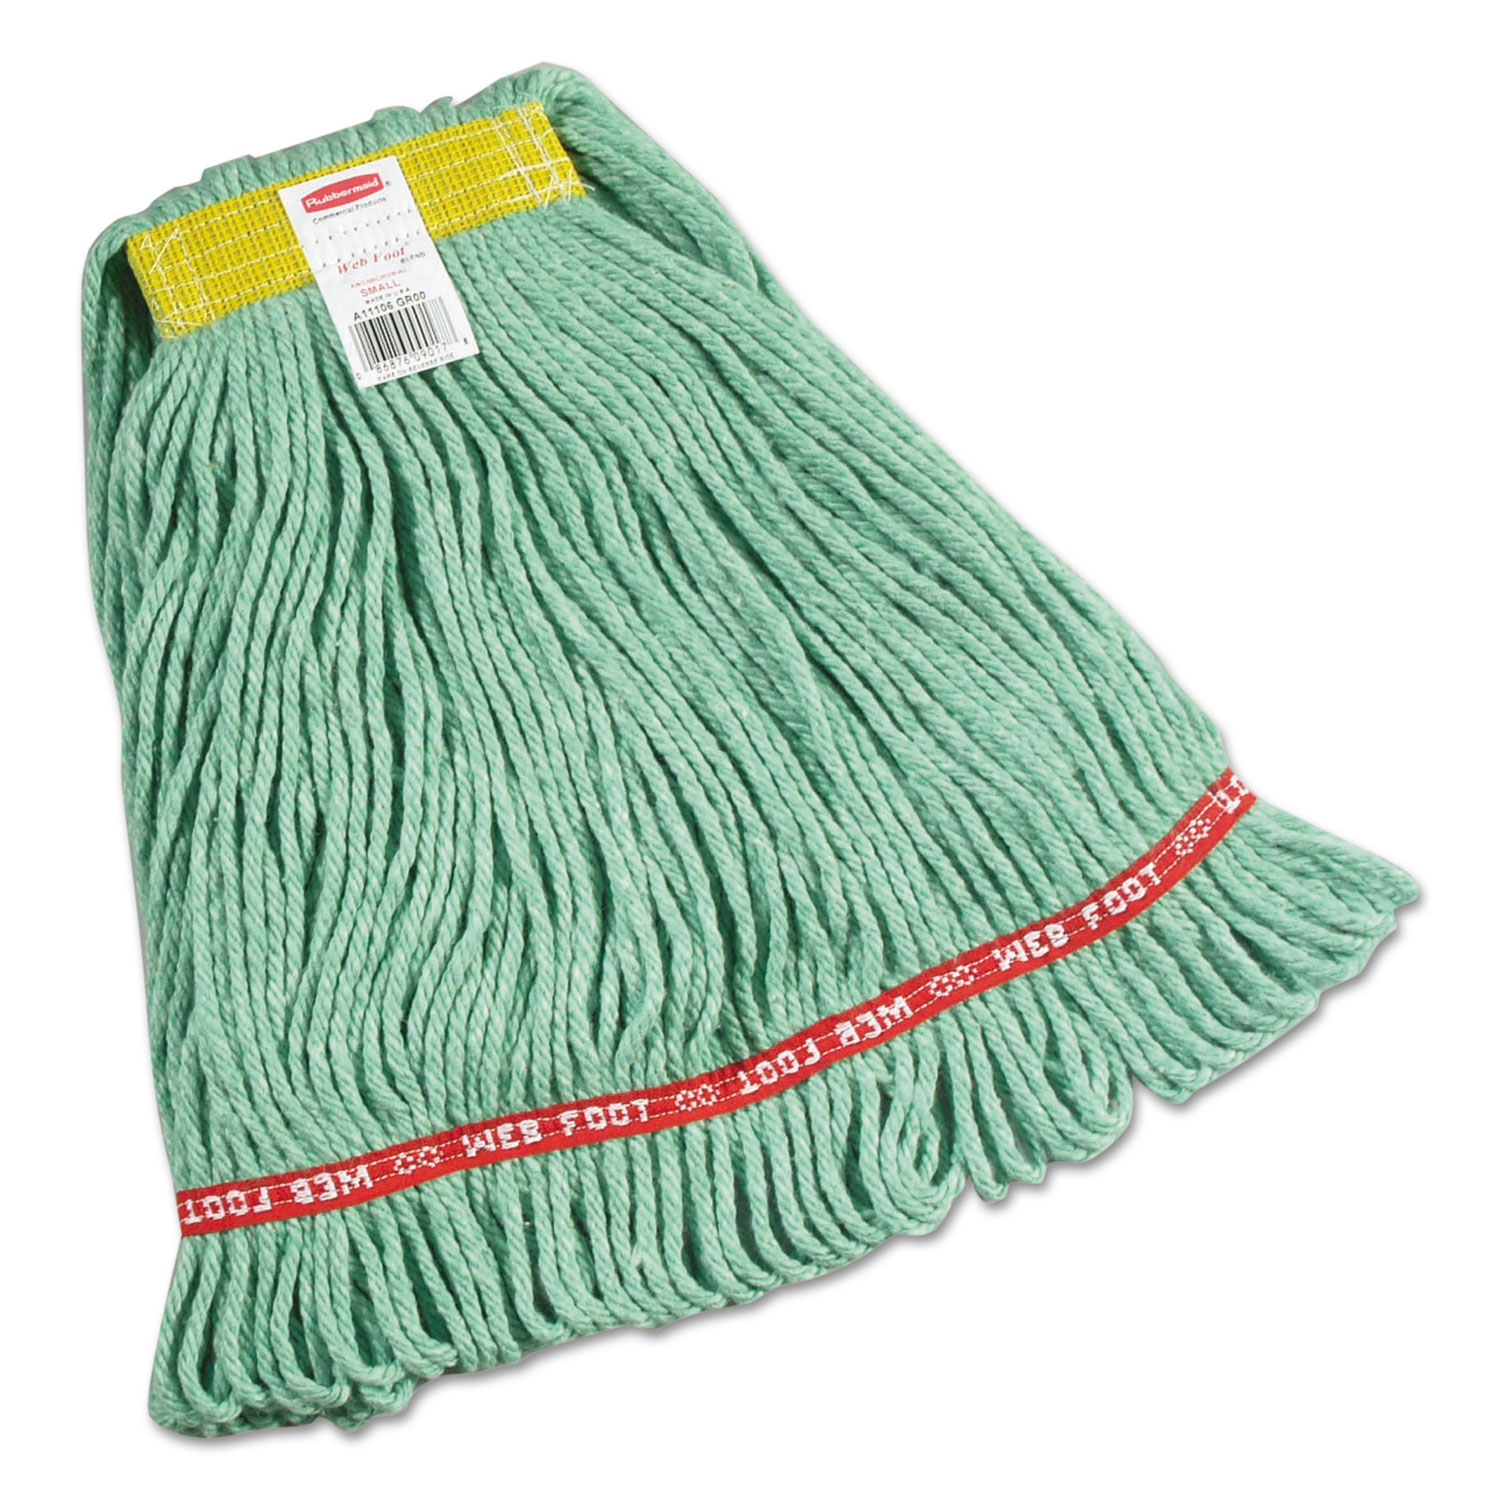 Web Foot Wet Mops, Cotton/Synthetic, Green, Small, 1Yellow Headband,6/Carton